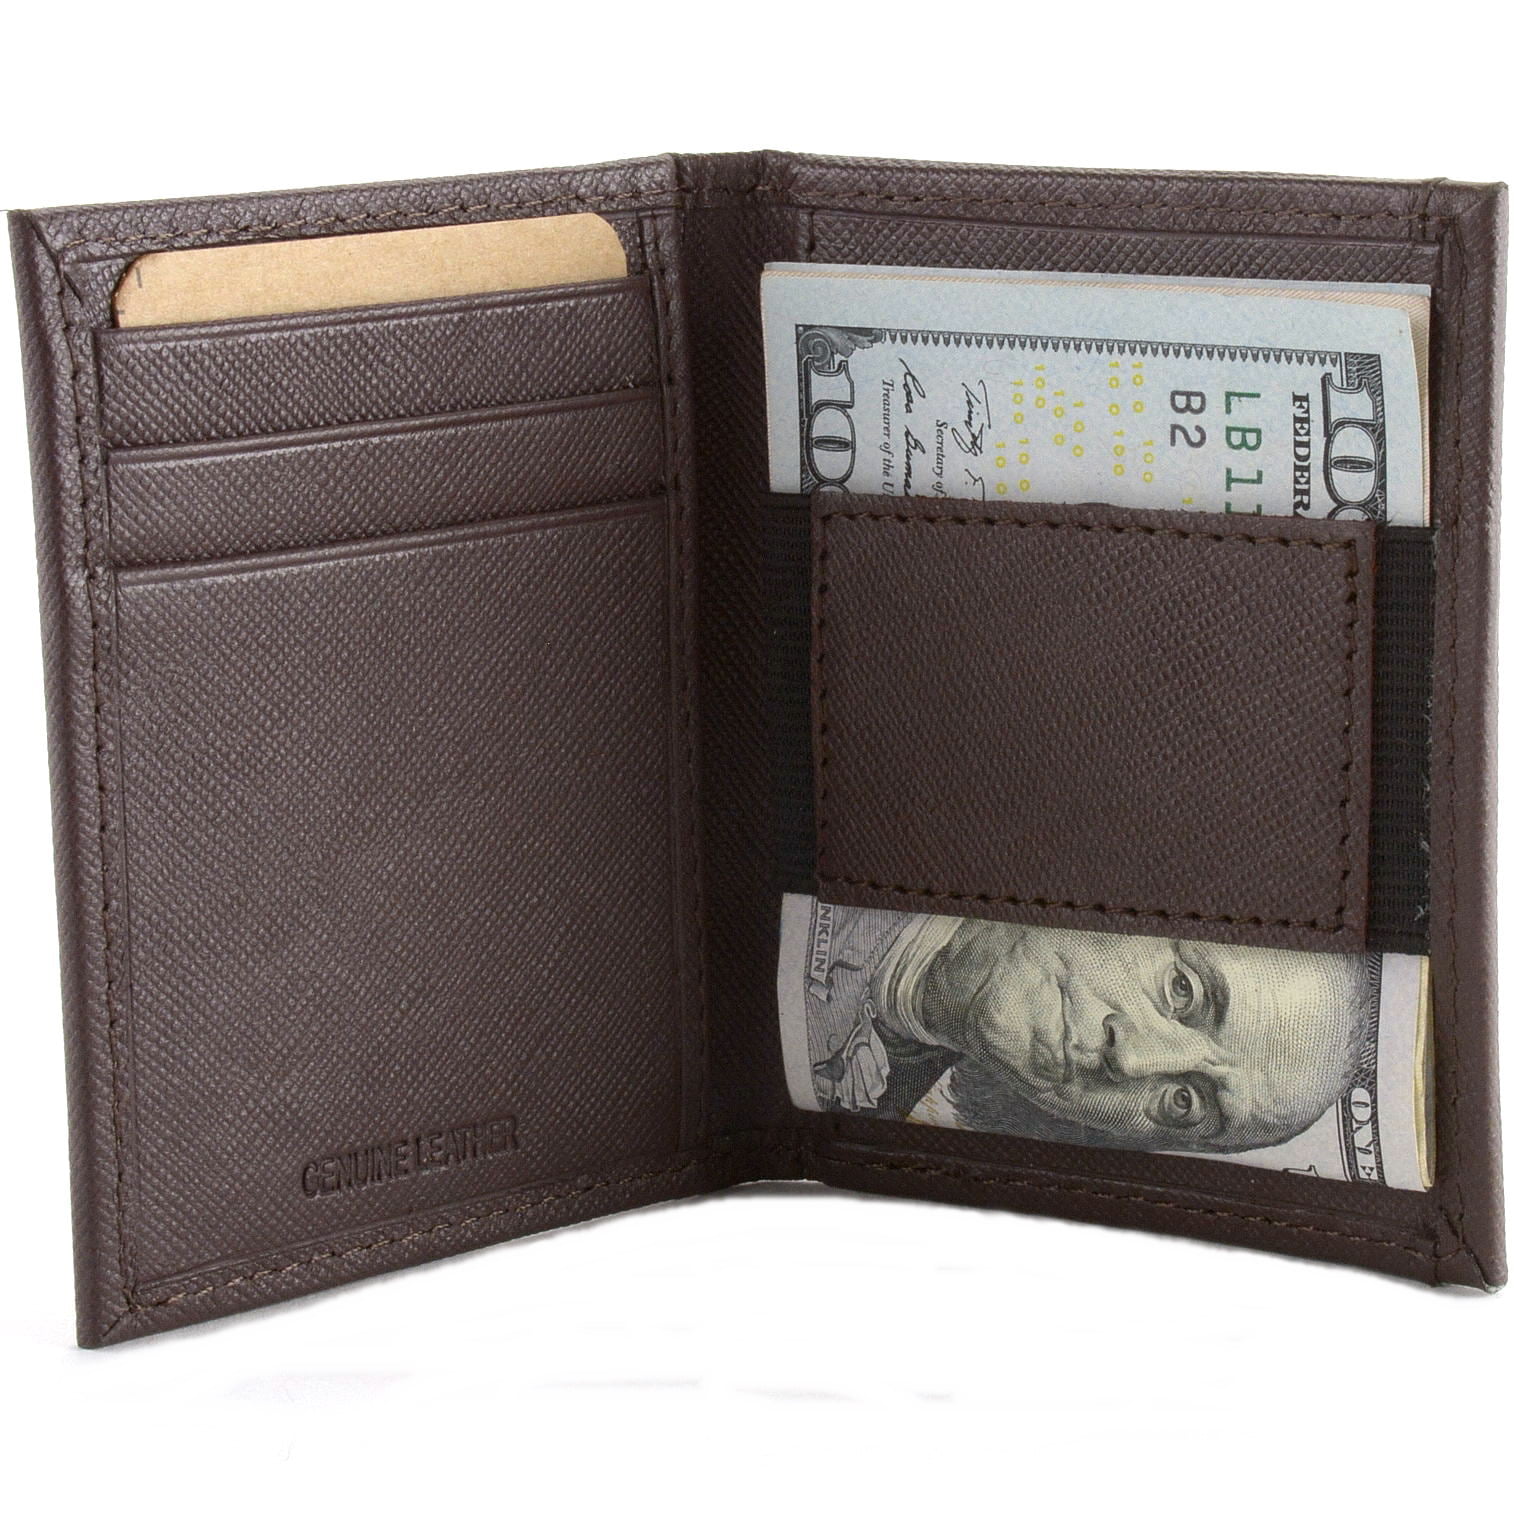 Cash Clip Wallet Mens : Aliexpress.com : Buy Handmade Leather Money ...